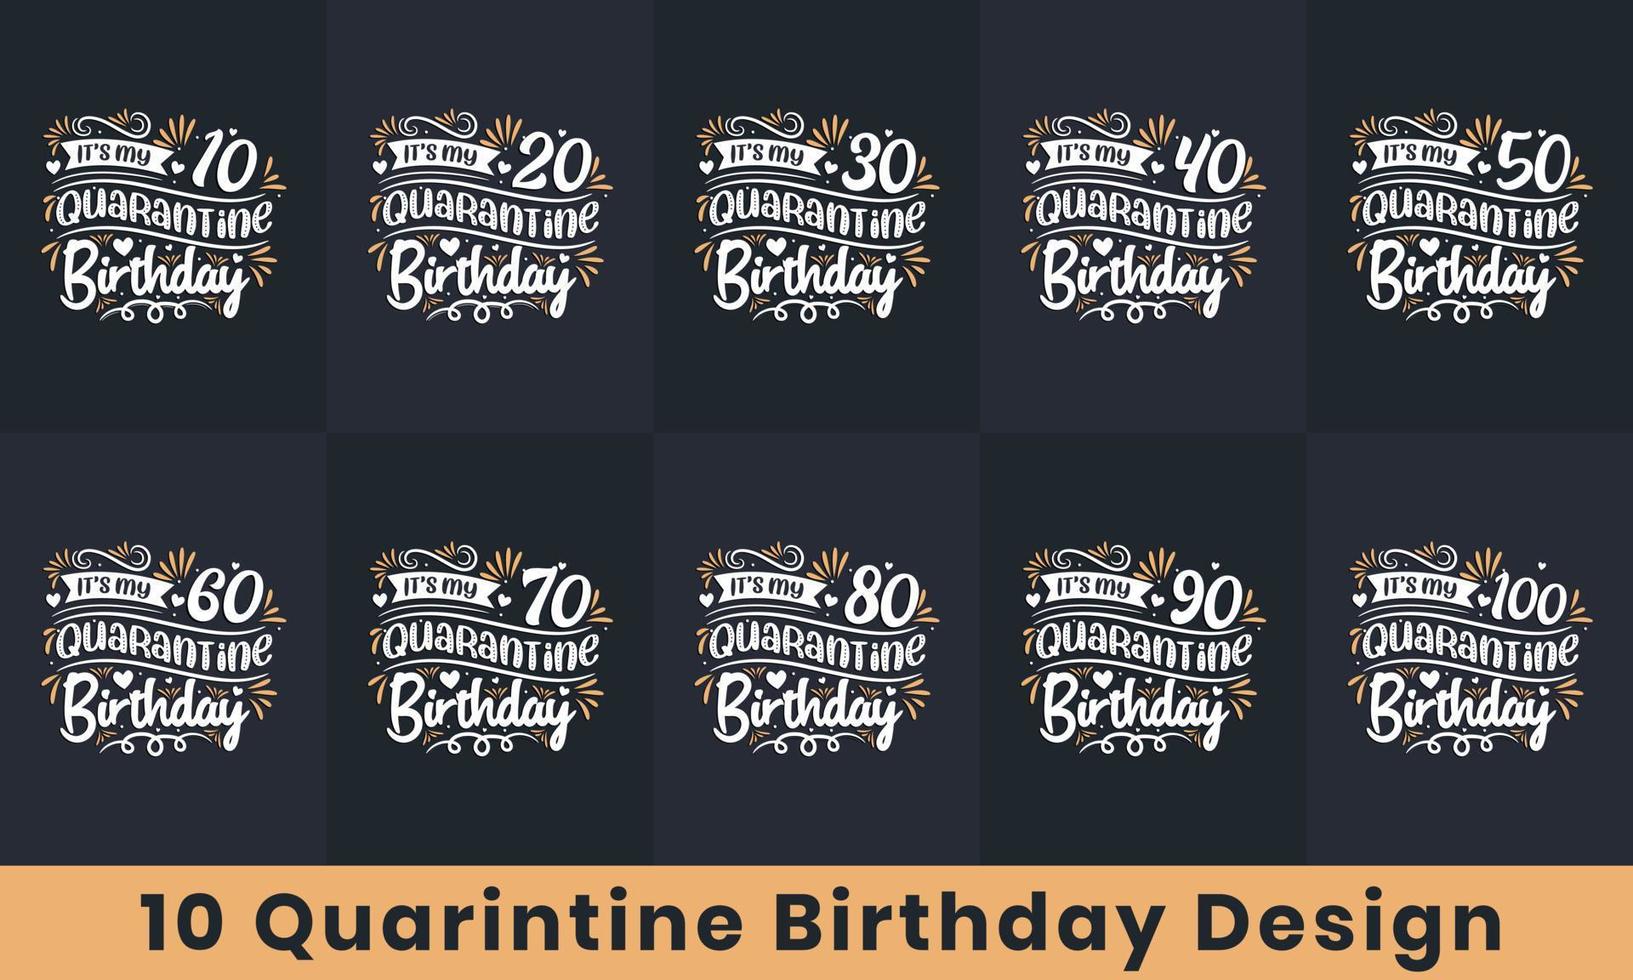 Happy Birthday design bundle. 10 Quarantine Birthday quote celebration Typography bundle. It's my 10, 20, 30, 40, 50, 60, 70, 80, 90, 100 Quarantine Birthday vector